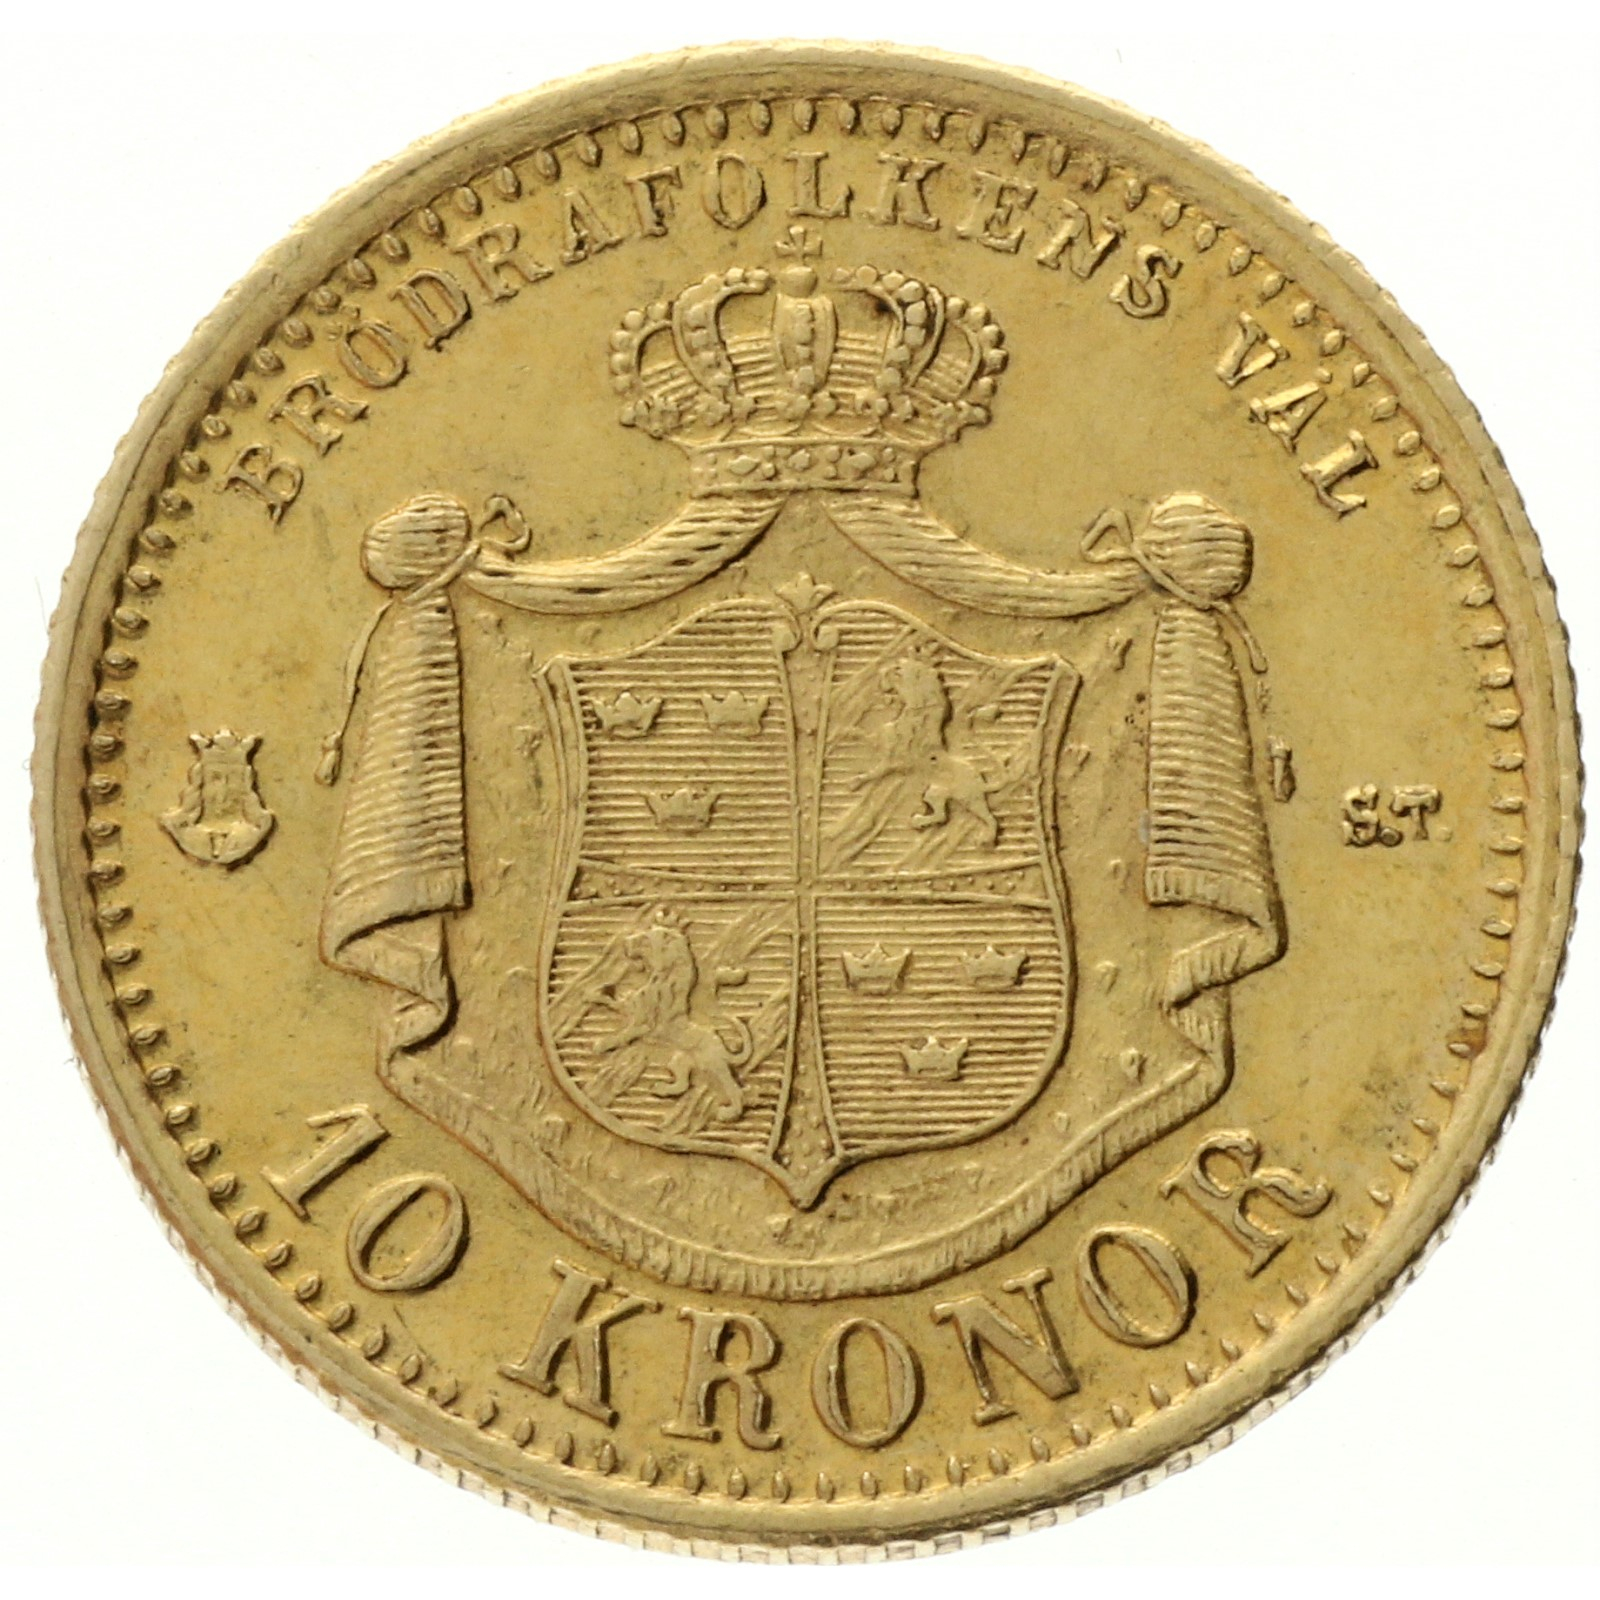 Sweden - 10 kroner - 1876 - Oscar II